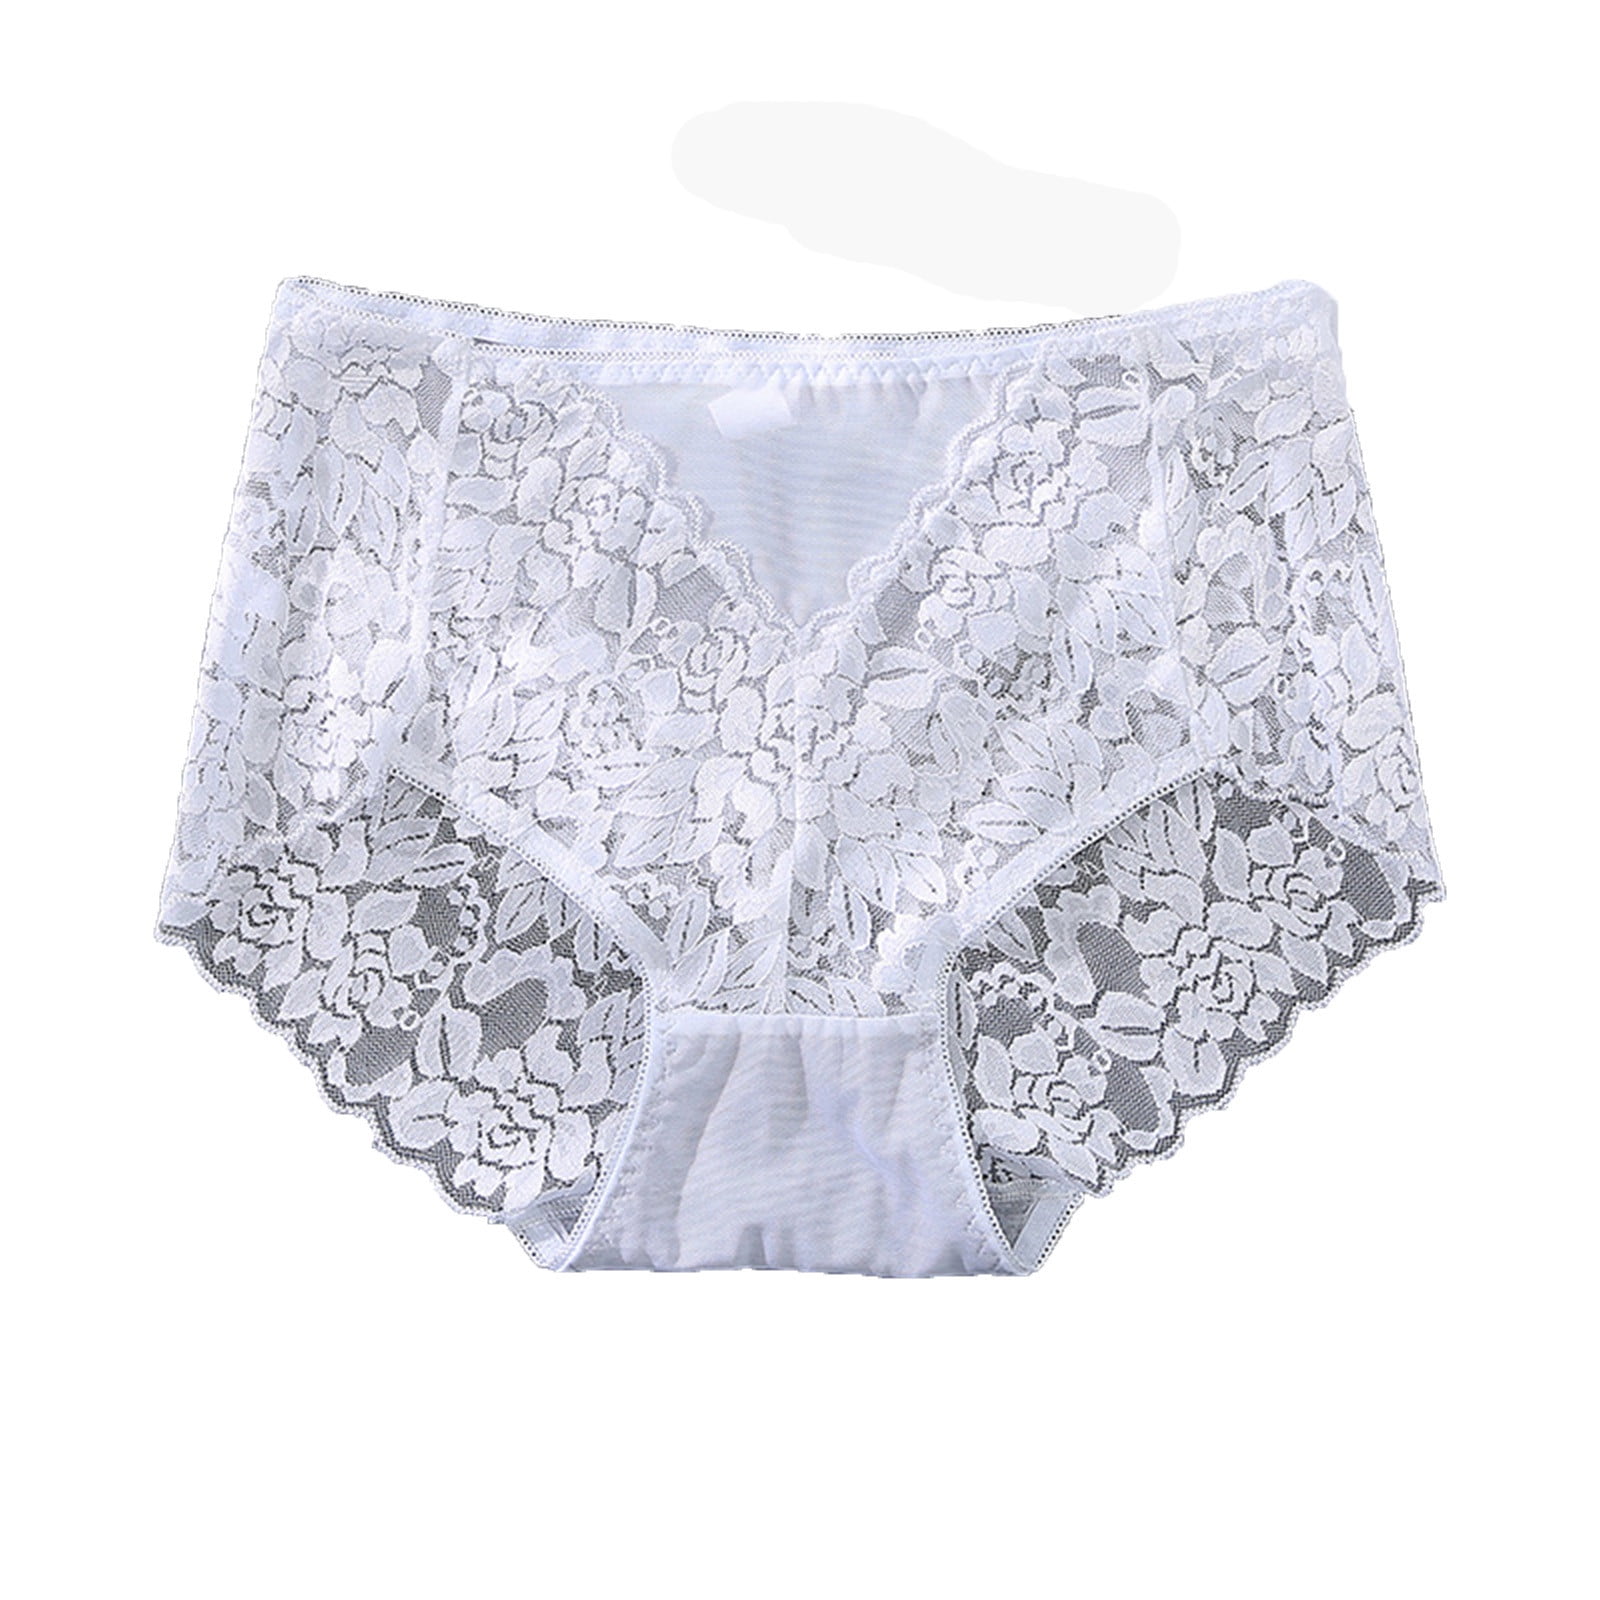 OFNITE Enterprise Women's High Waist Cotton Lycra Safety Shorts/Under Skirt  Shorts/Boyshort Panty with Lace